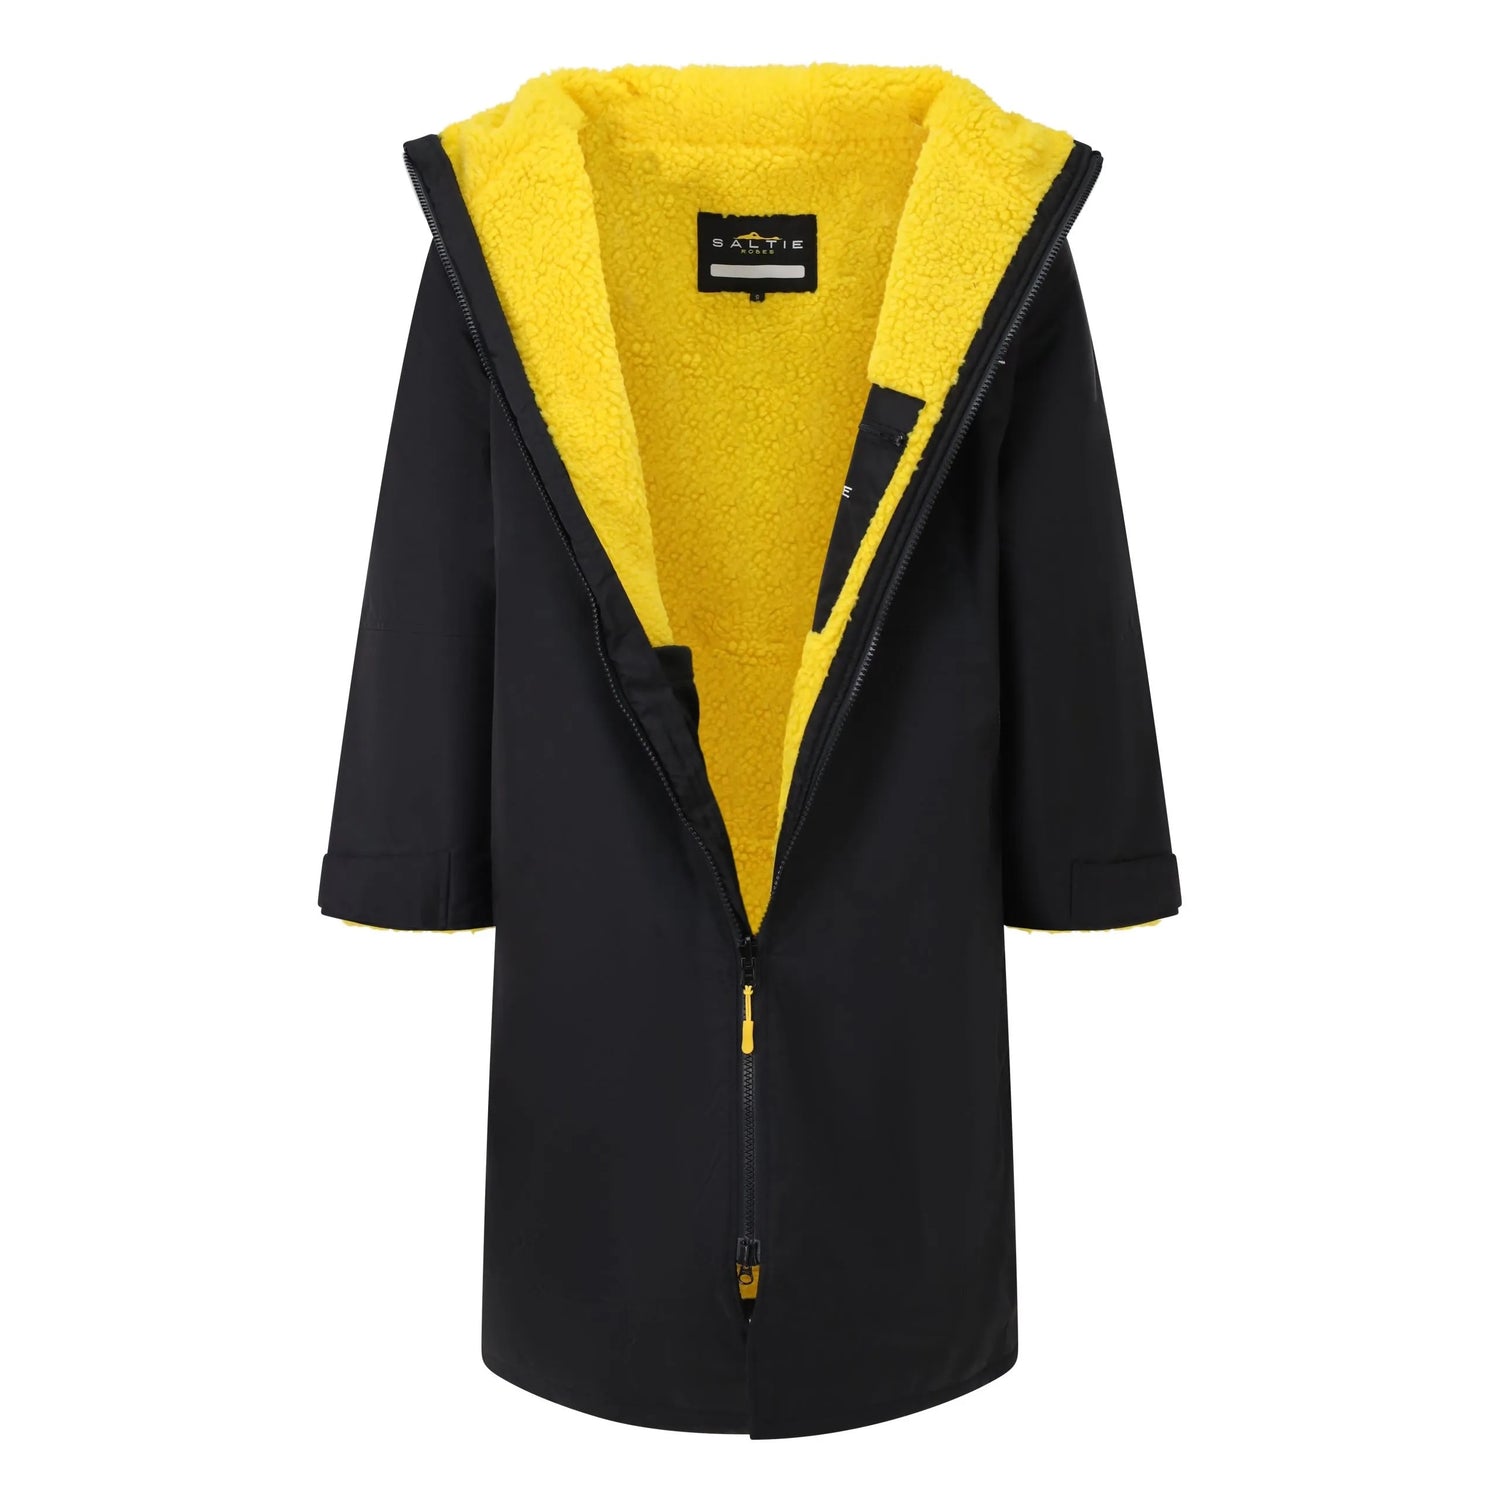 Saltie Elite Changing Robe - Black/Yellow